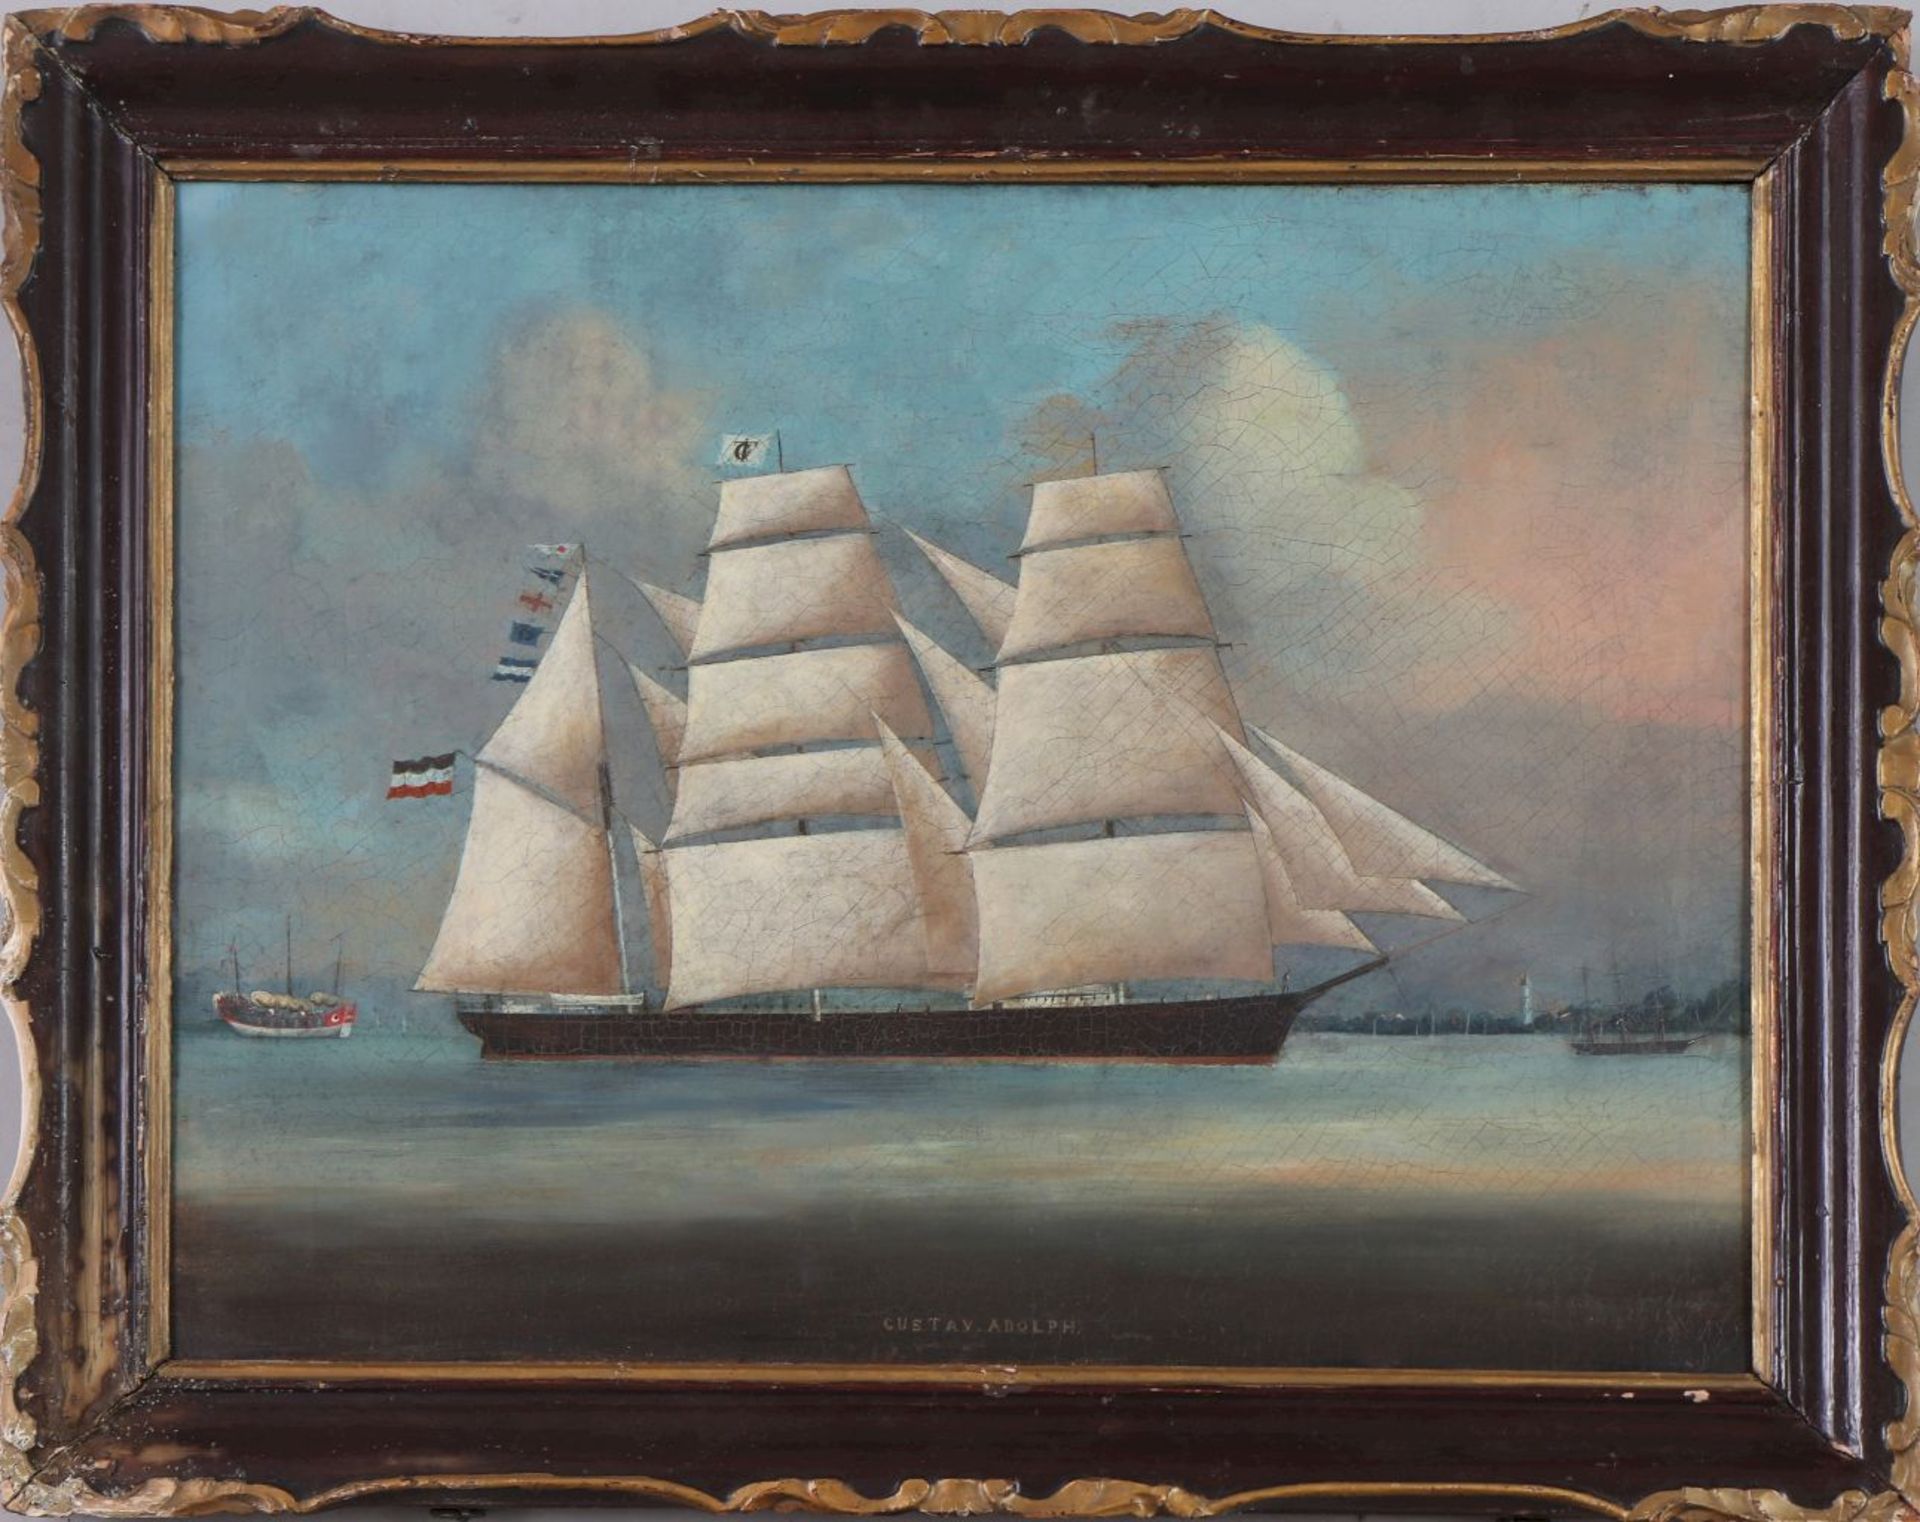 Kapitänsbild des Segelschiffs ¨Gustav Adolph¨